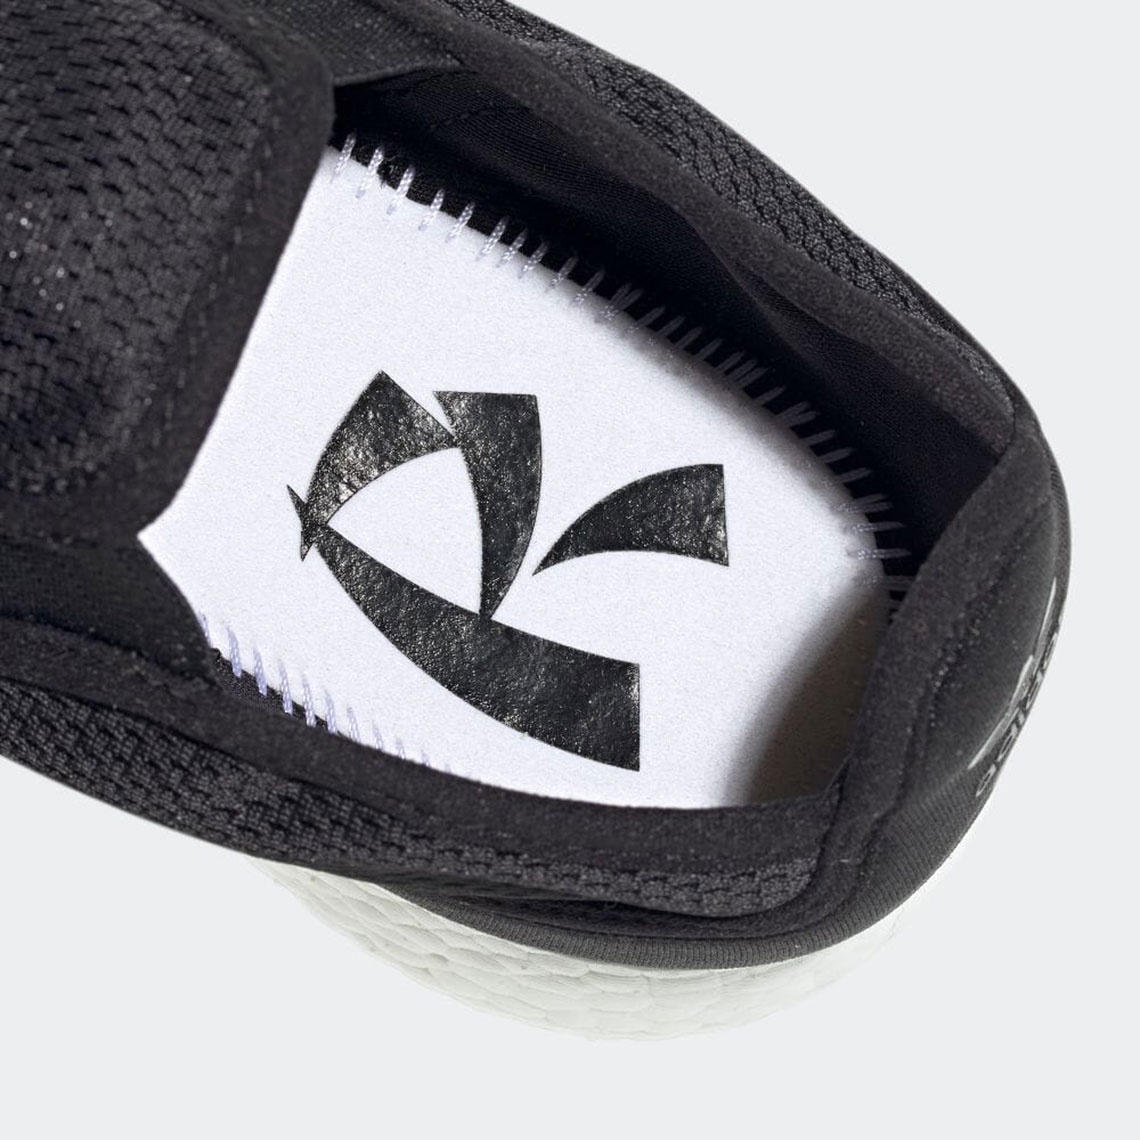 Adidas Human Made Pure Slip On Core Black H02546 7